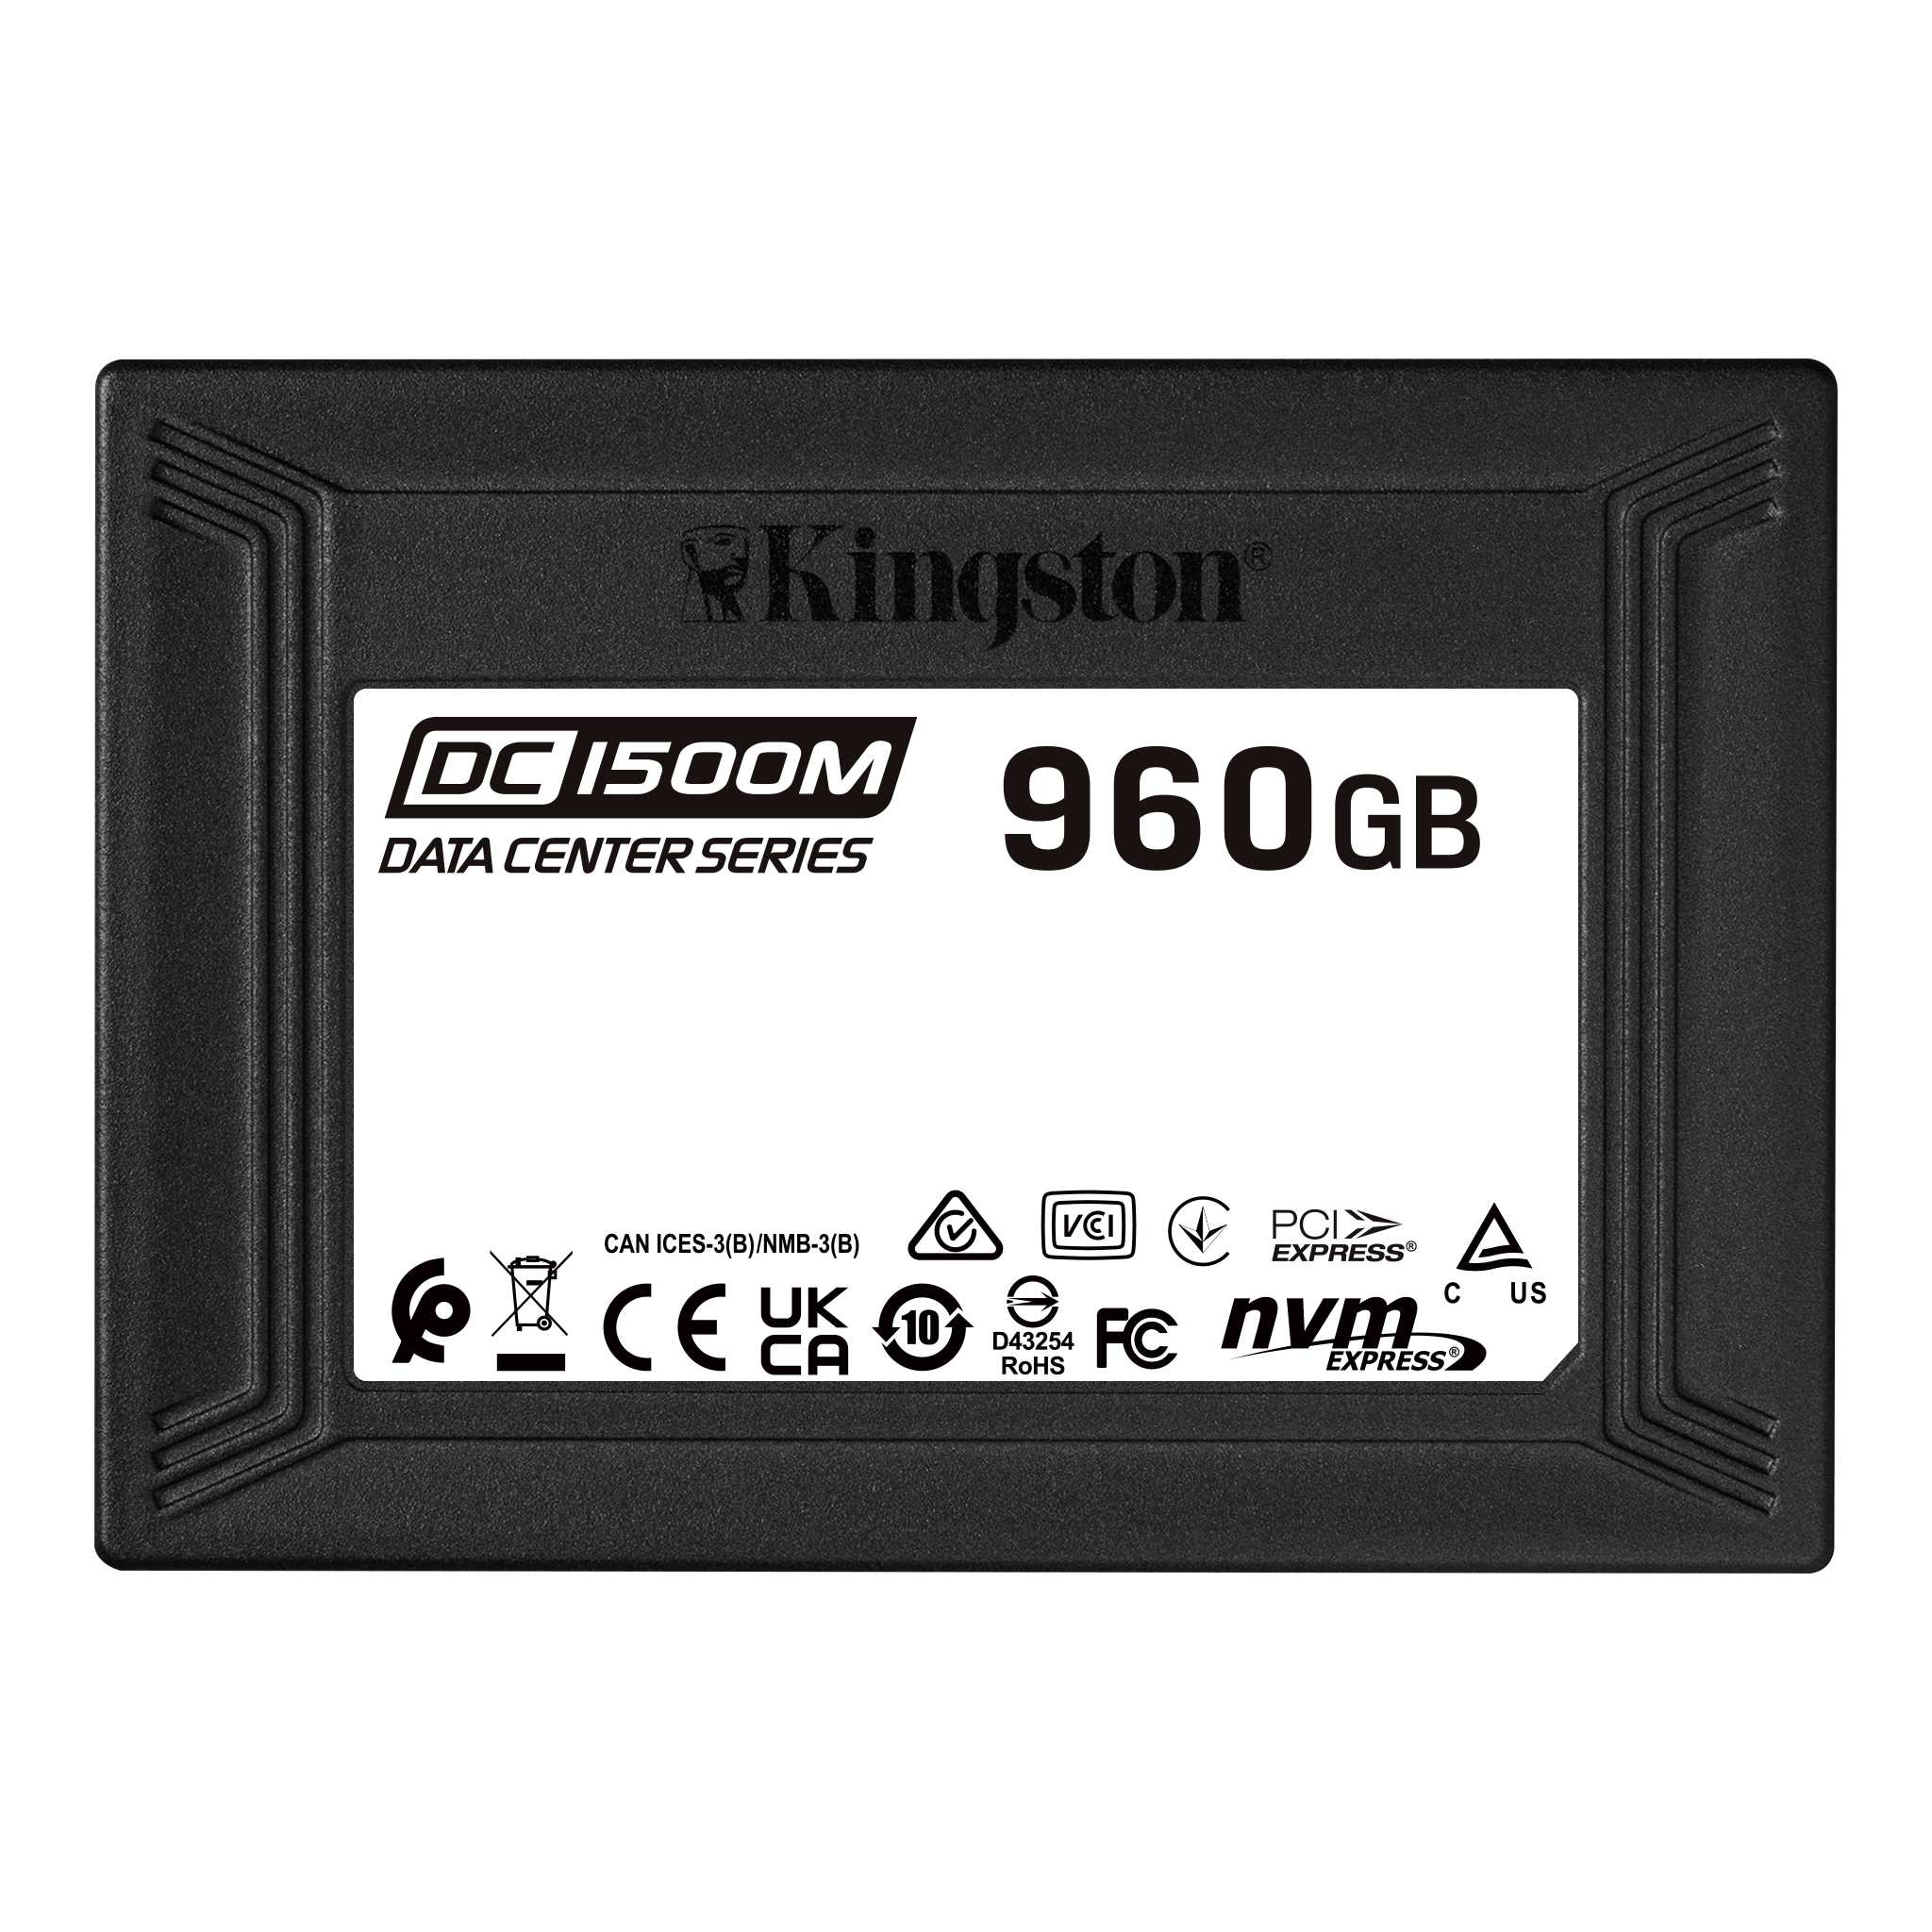 Kingston Data Center DC1500M - SSD - 960 GB - intern - 2.5" (6.4 cm)